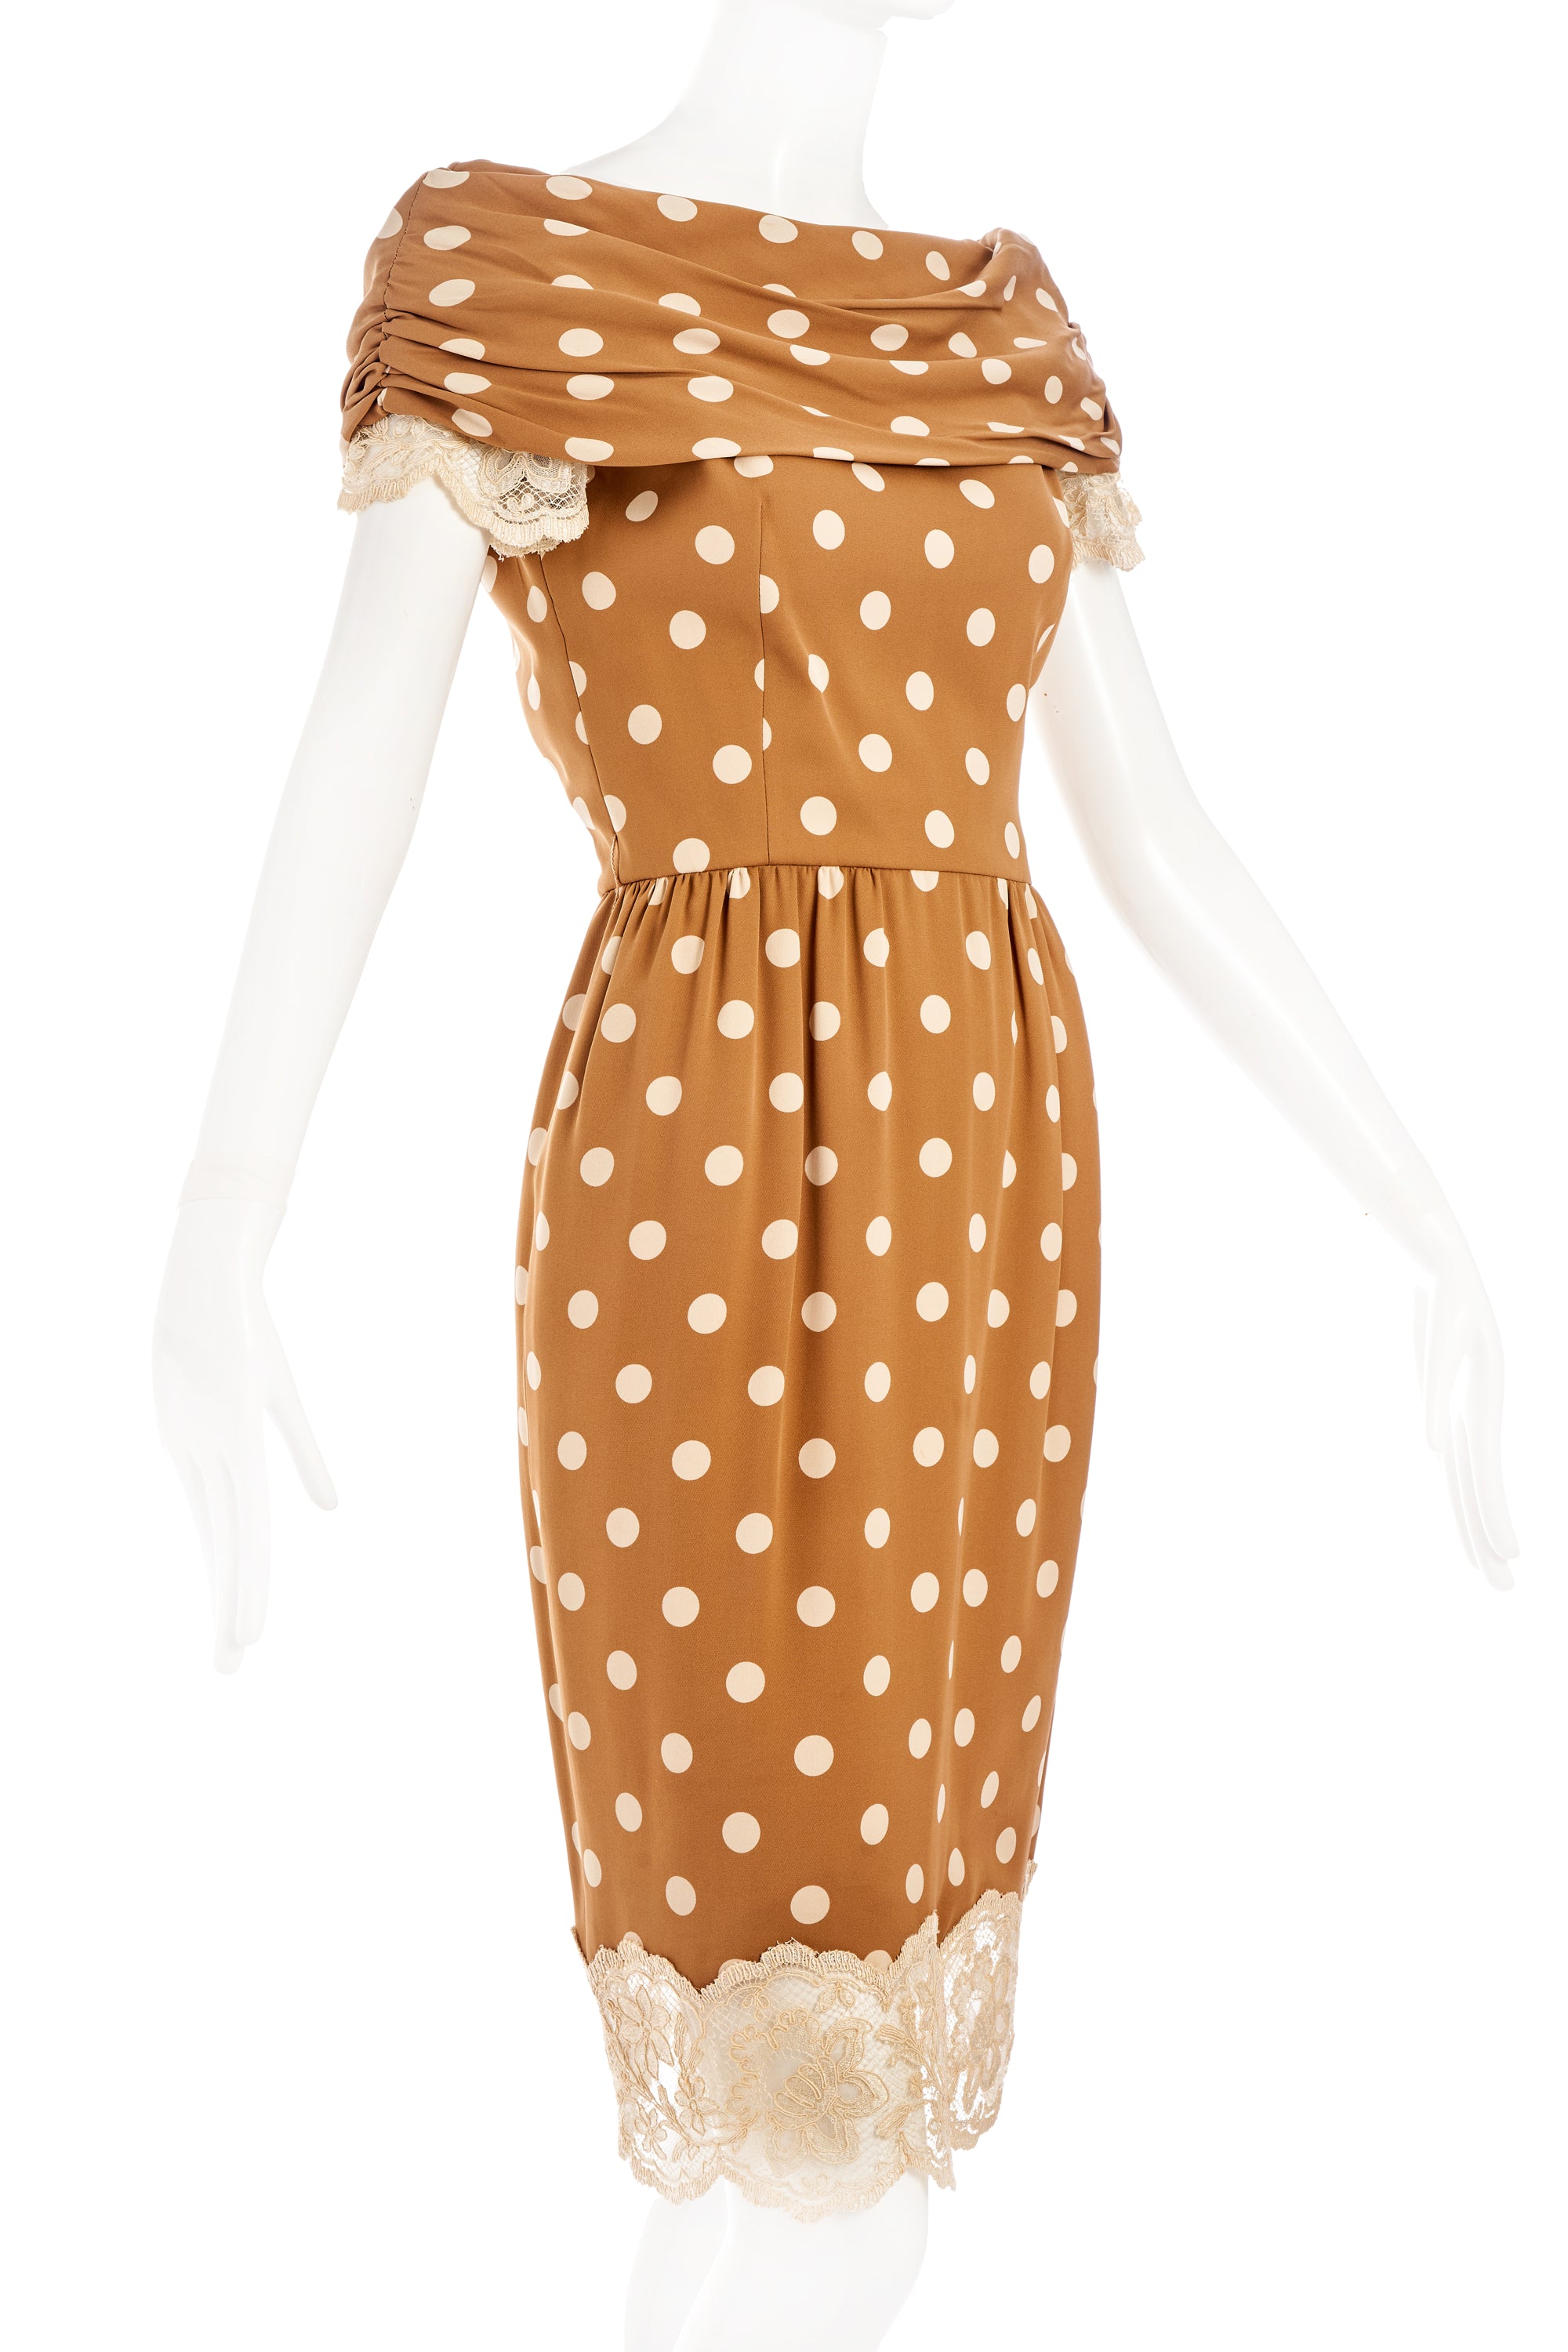 Valentino Brown and Cream Polka Dot Lace trim Dress